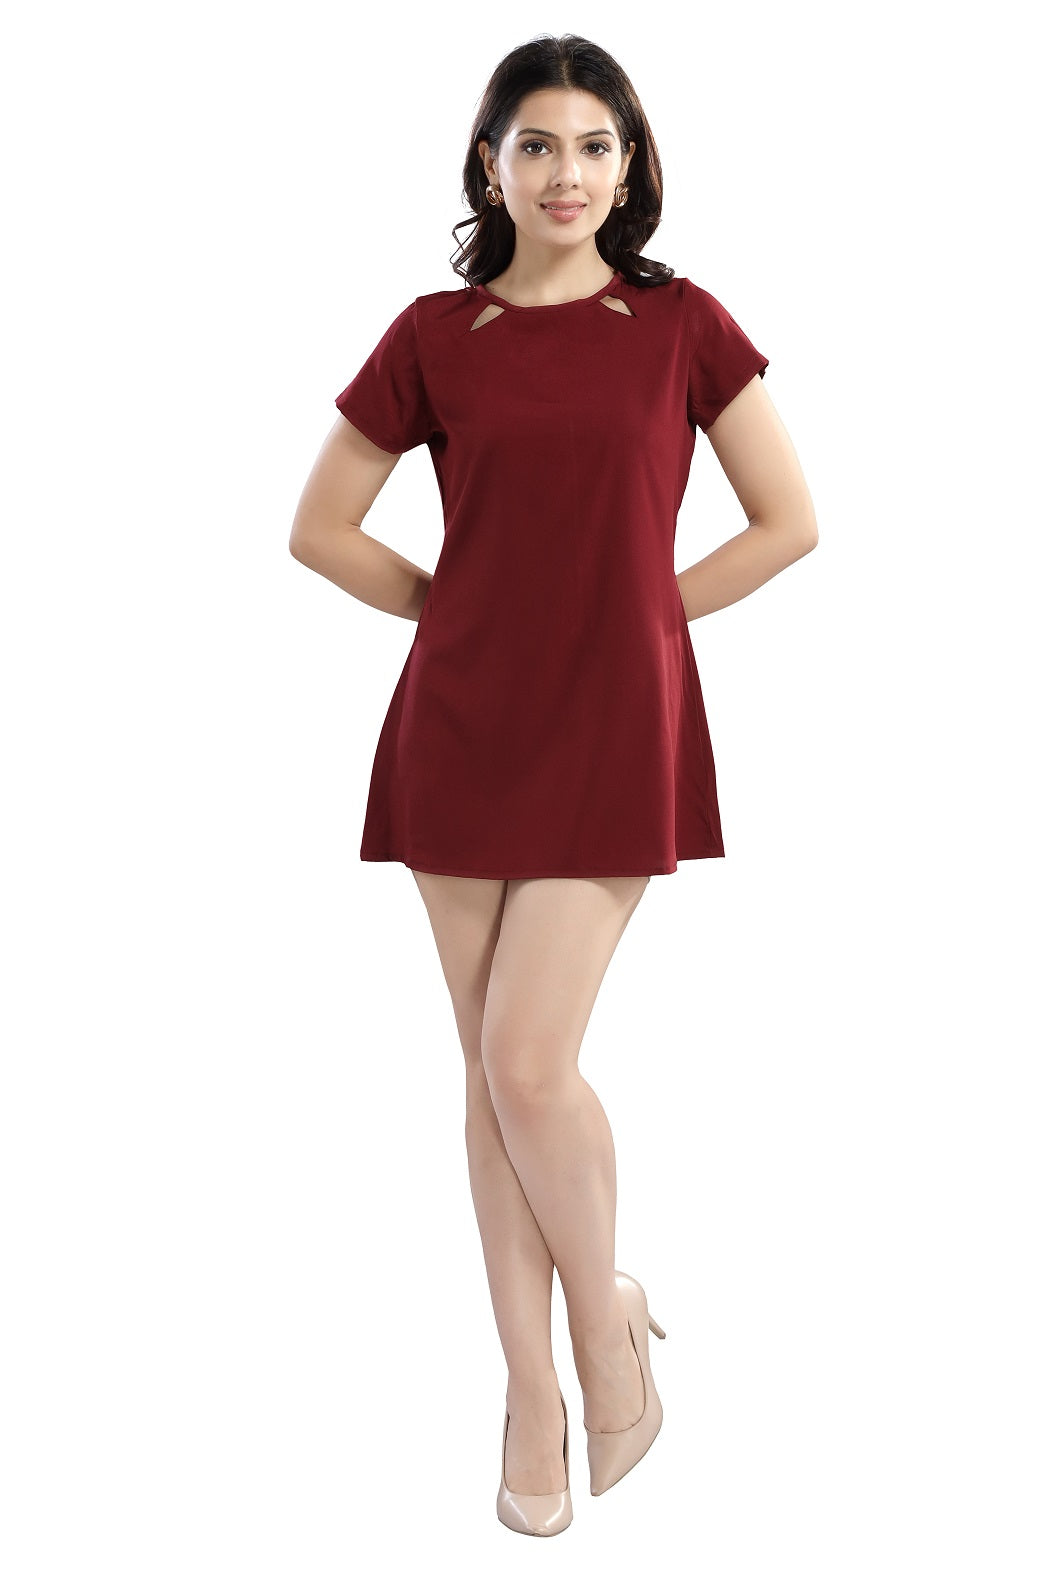 Cherrylavish  Solid Maroon Crepe Mini A-Line Dress With Cut-outs